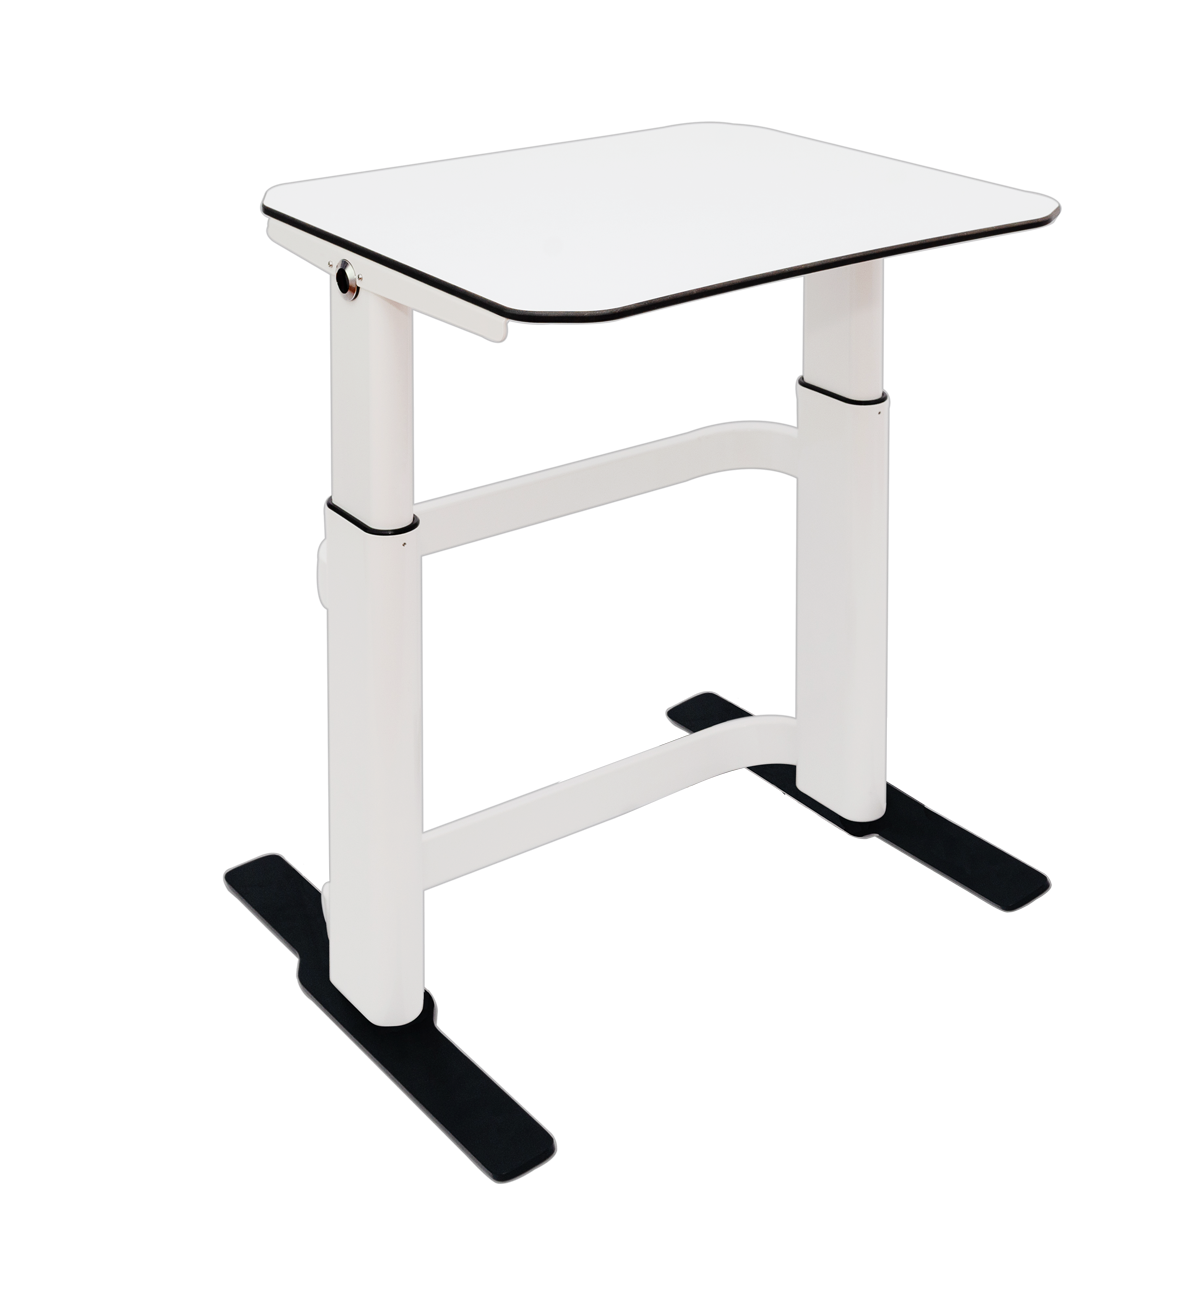 Amperstand-Small Desk-Non Writable-Steel Feet